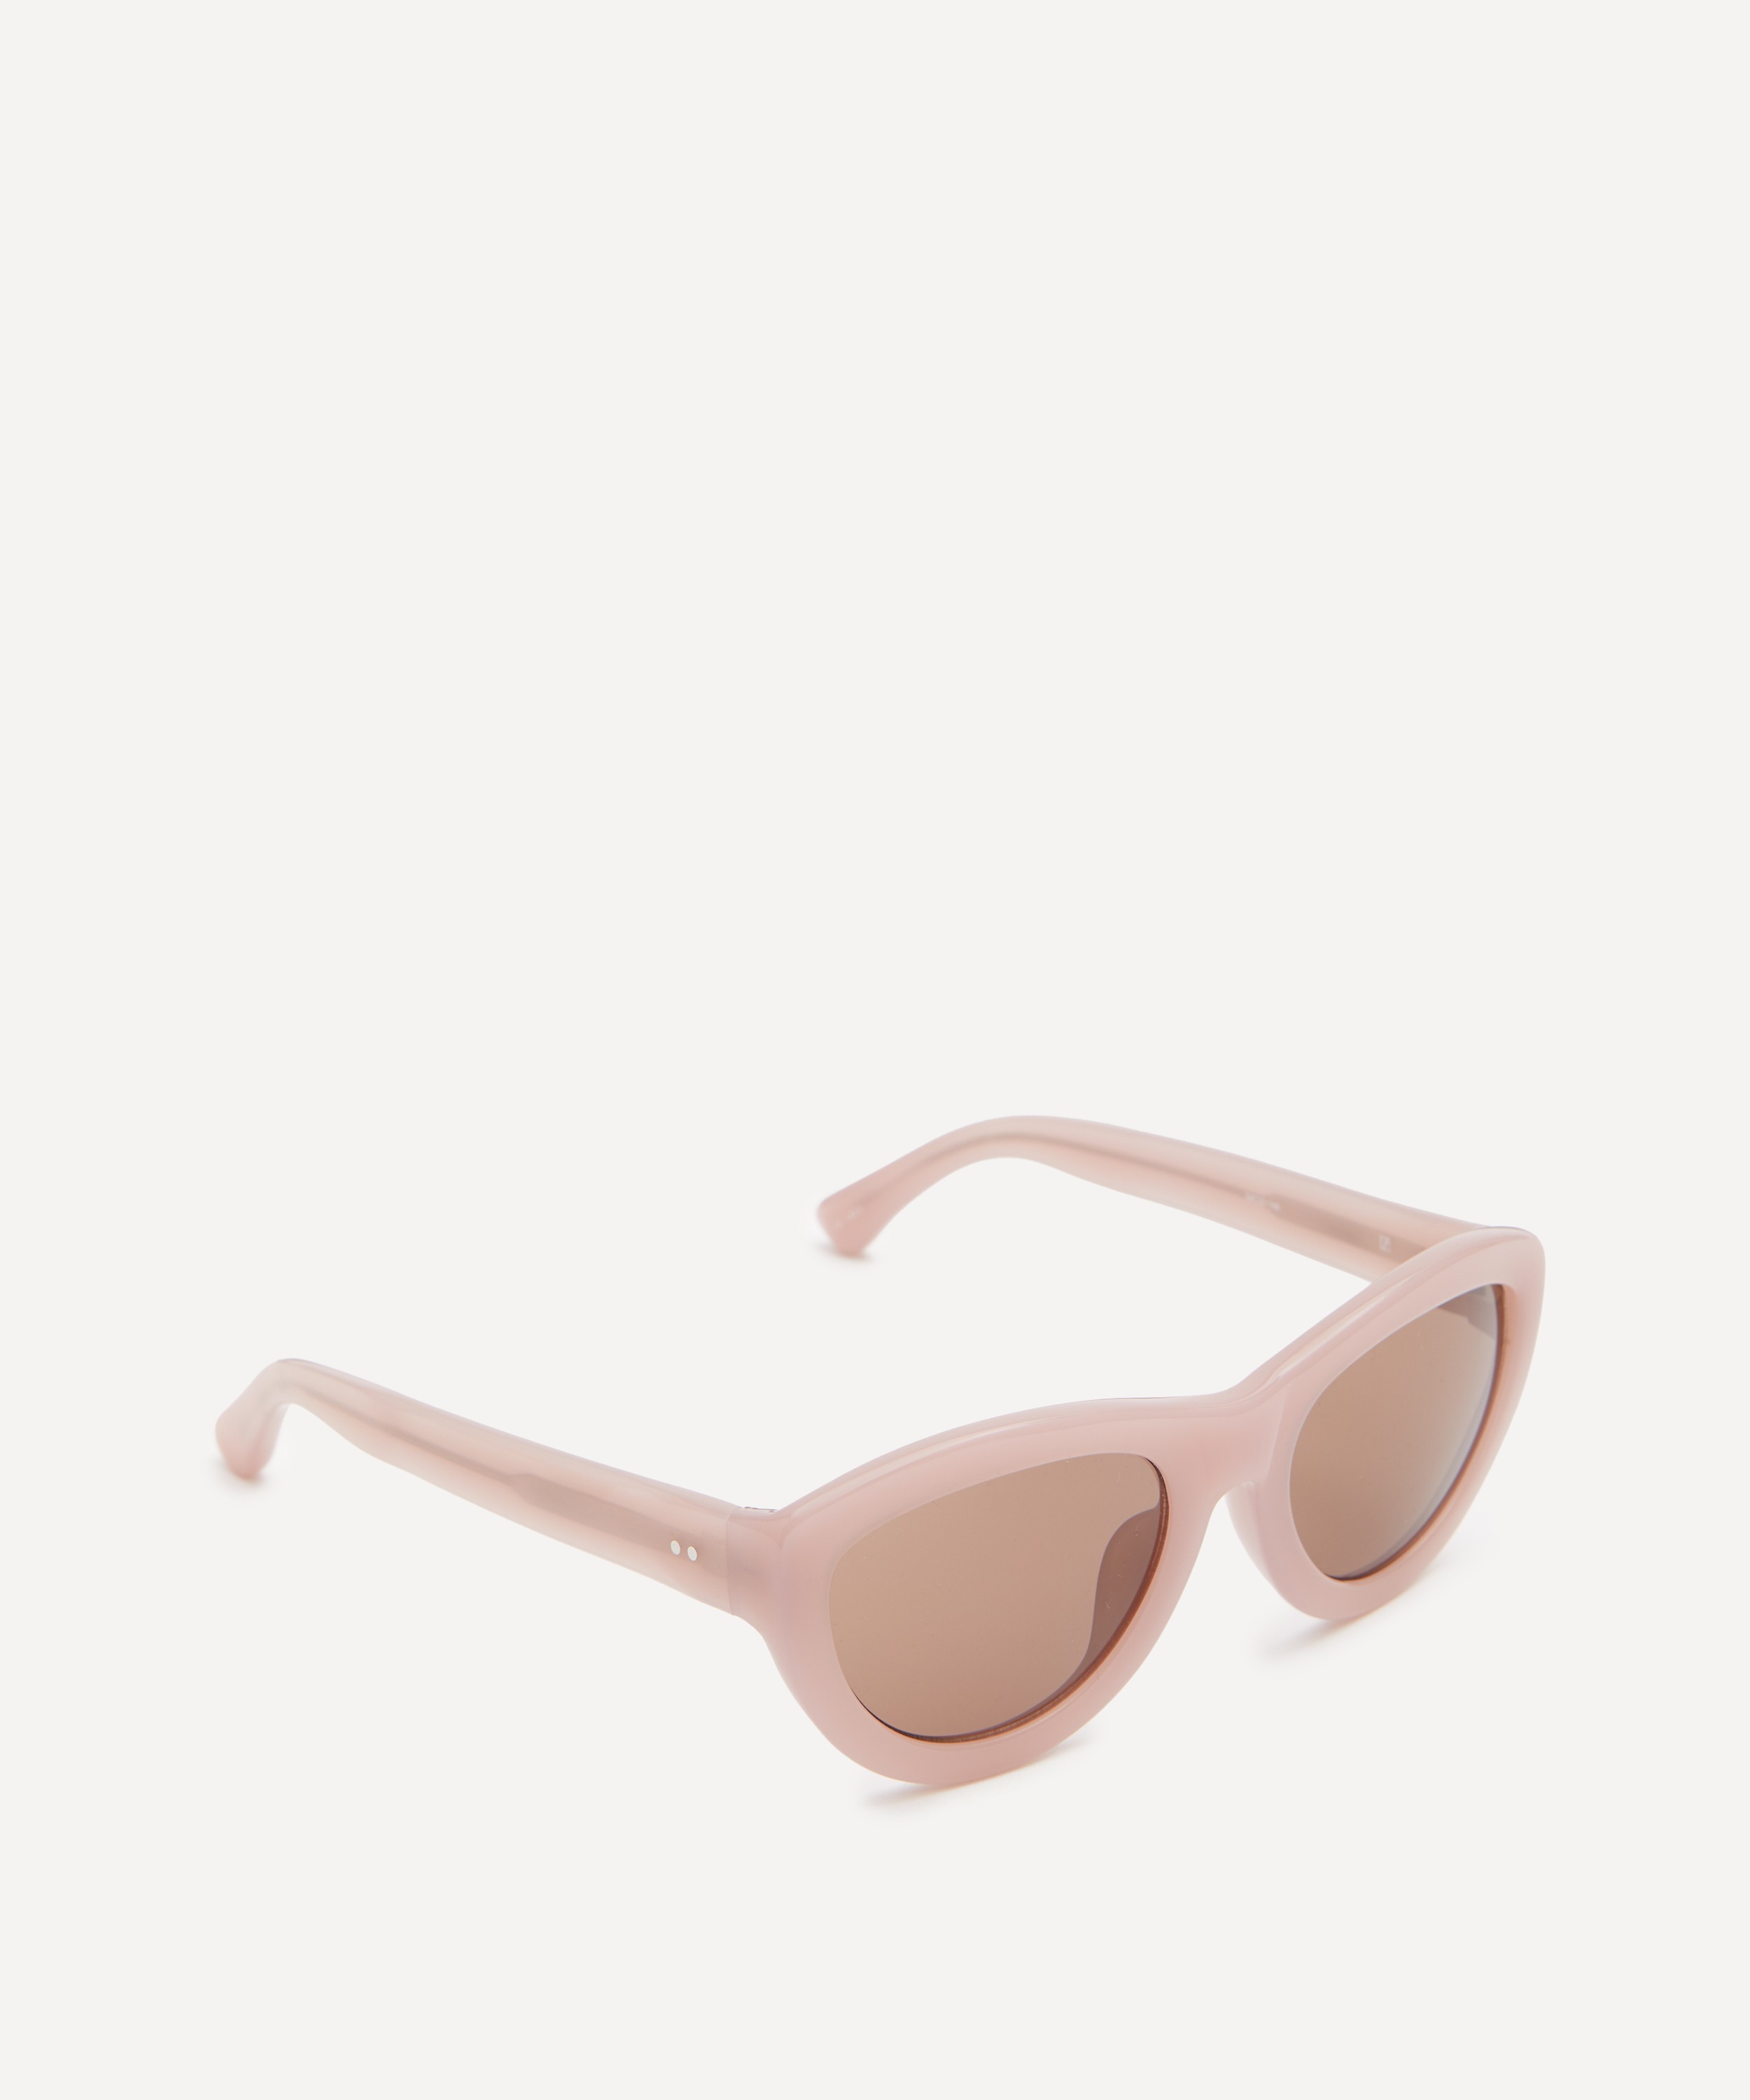 cat eye pink sunglasses